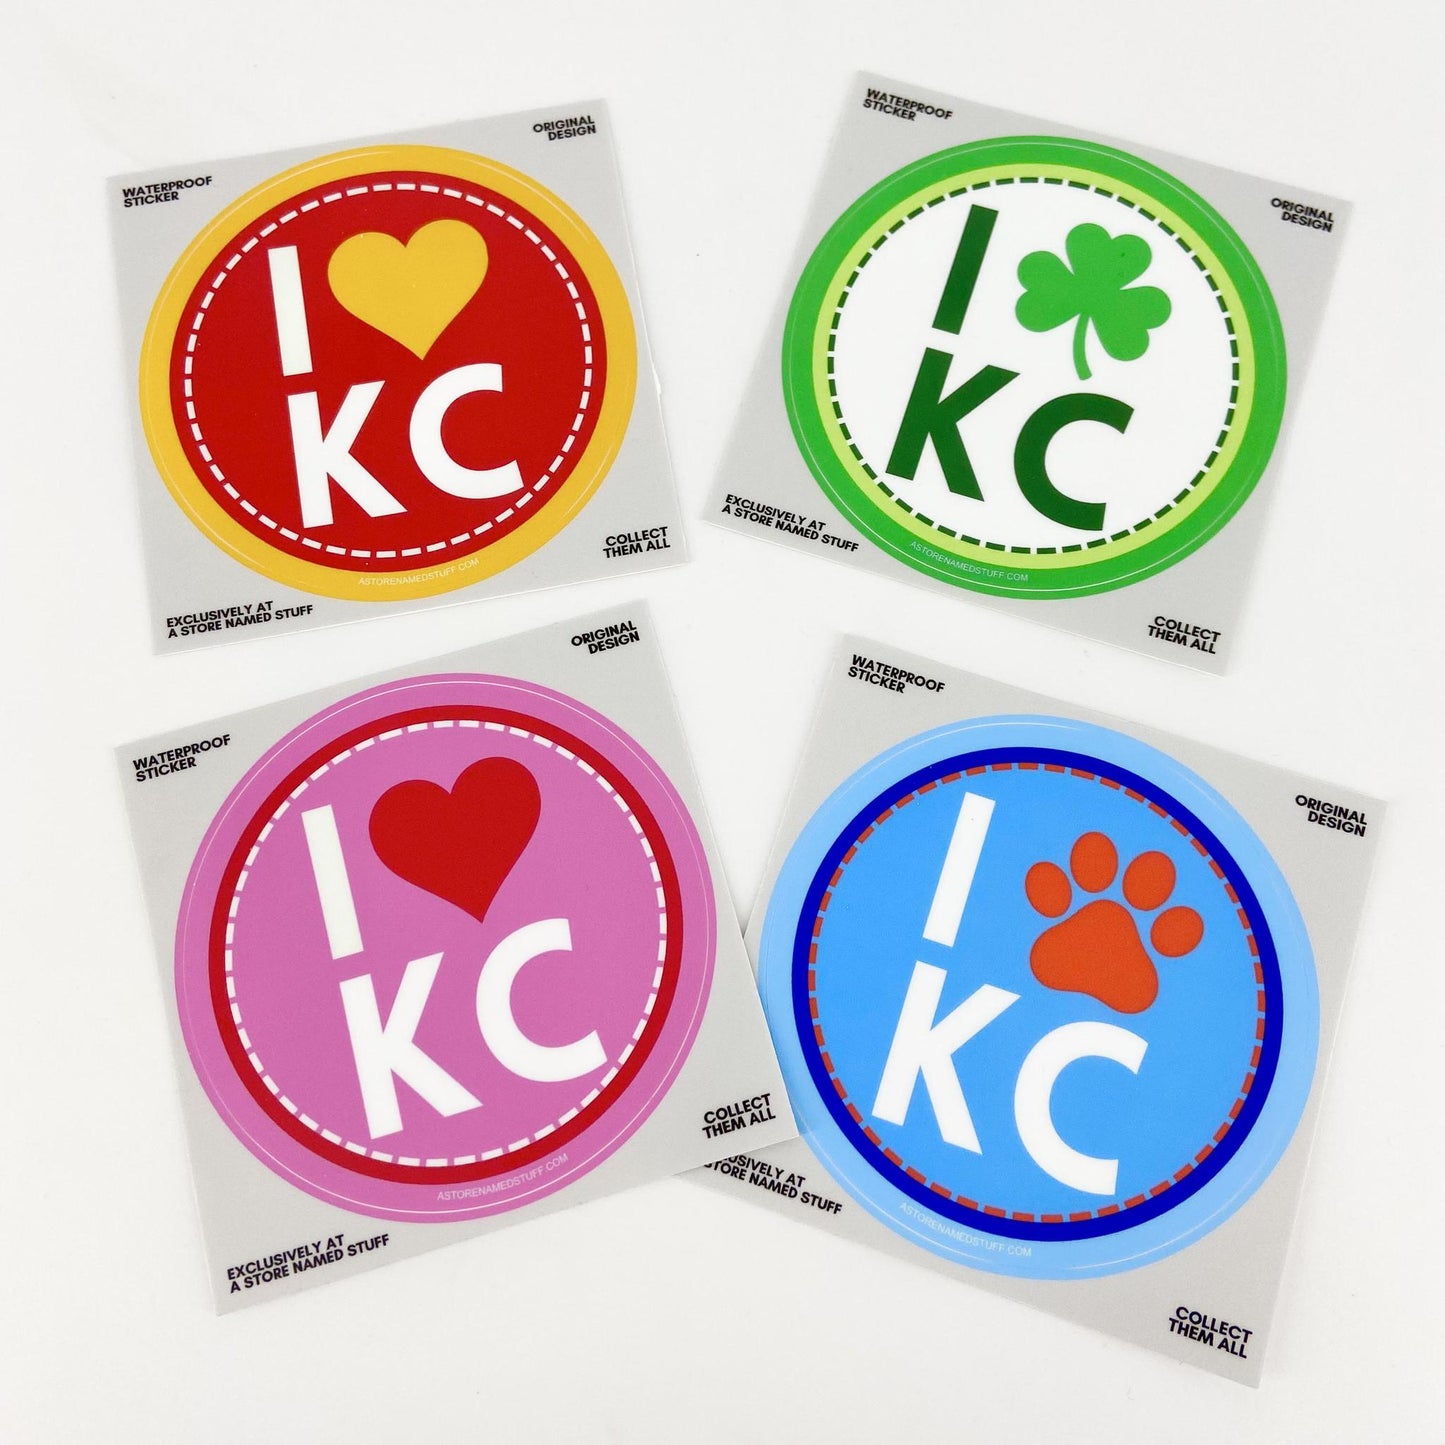 Sticker - I (Paw Print) KC - Blue/Red